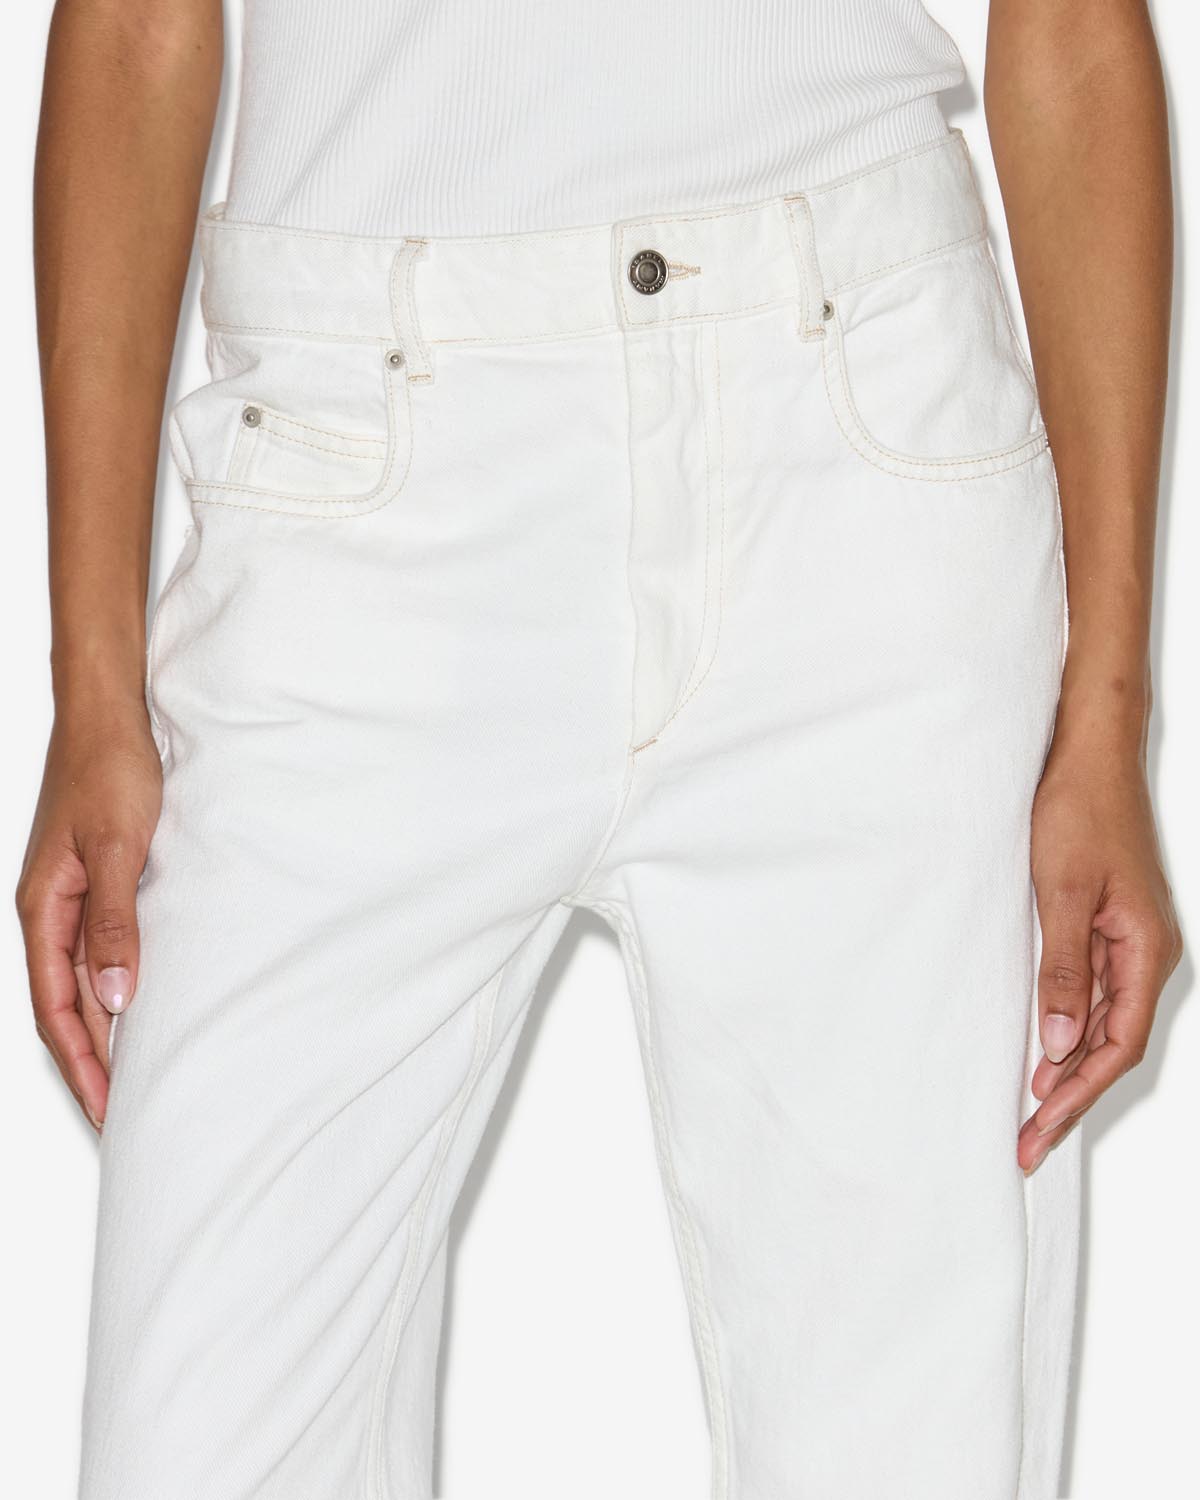 Belvira jeans Woman Bianco 2